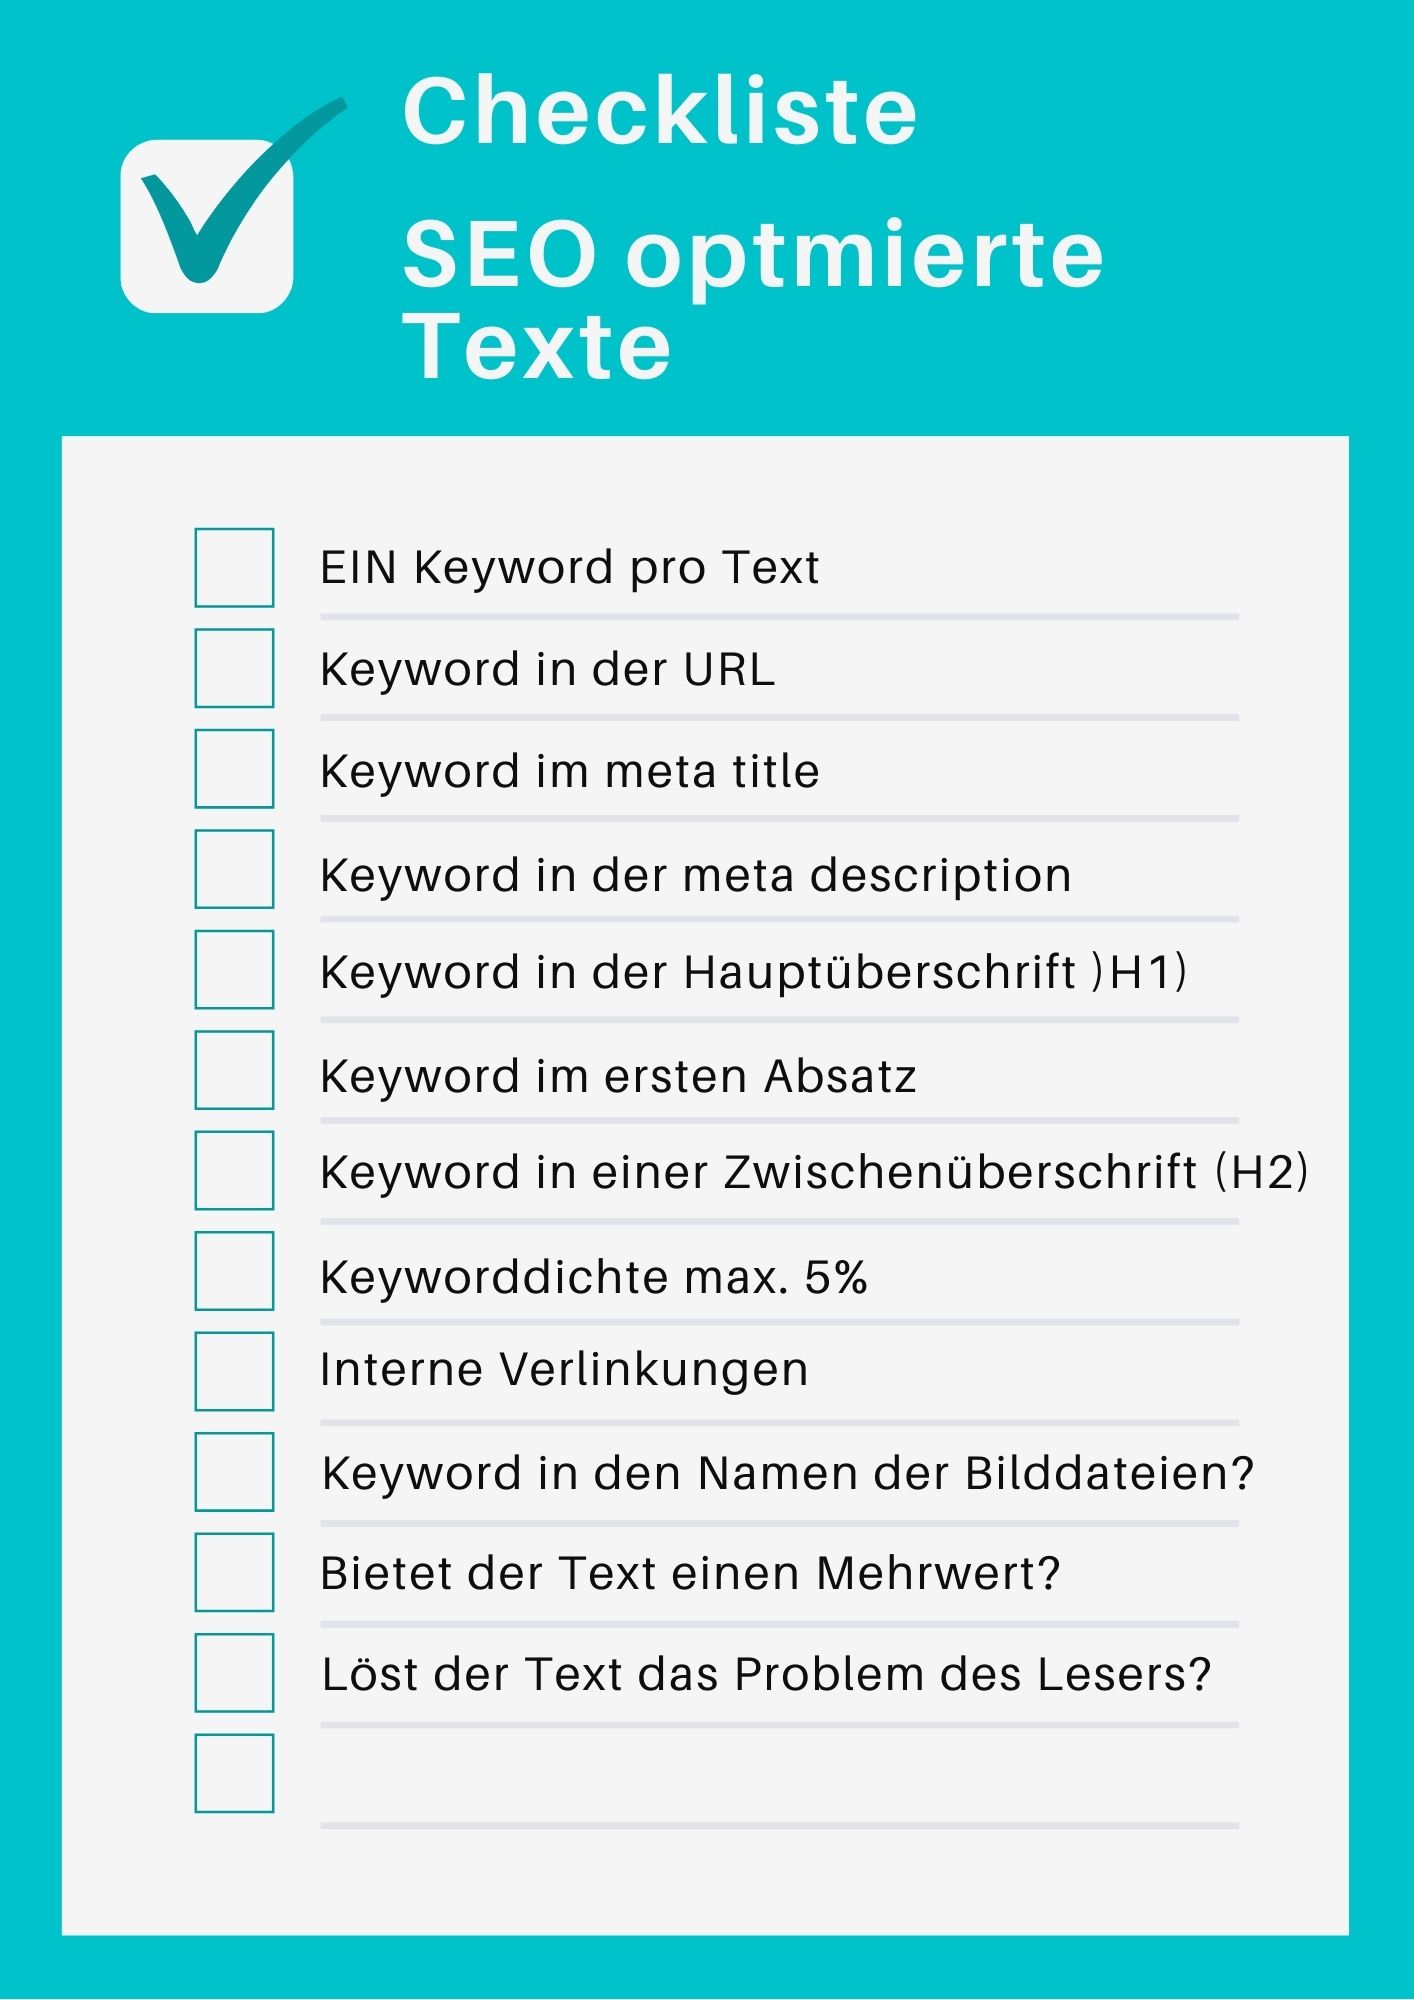 Checkliste für SEO optimierte Texte